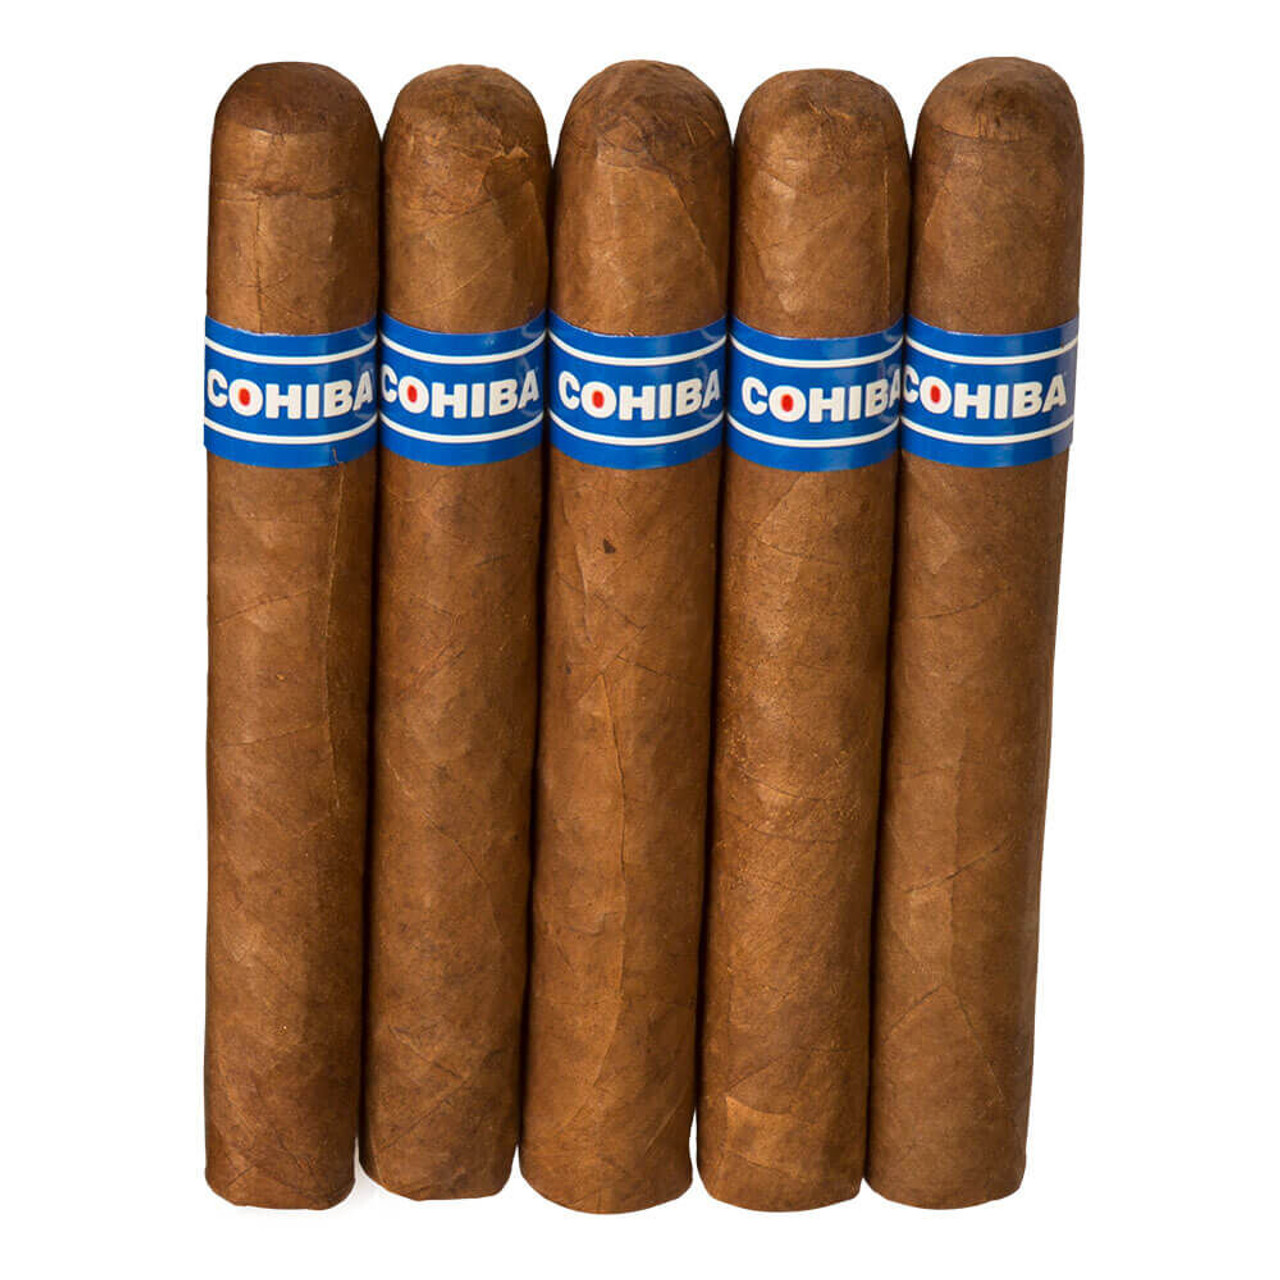 Cohiba Blue Robusto Cigars - 5.5 x 50 (Pack of 5) *Box